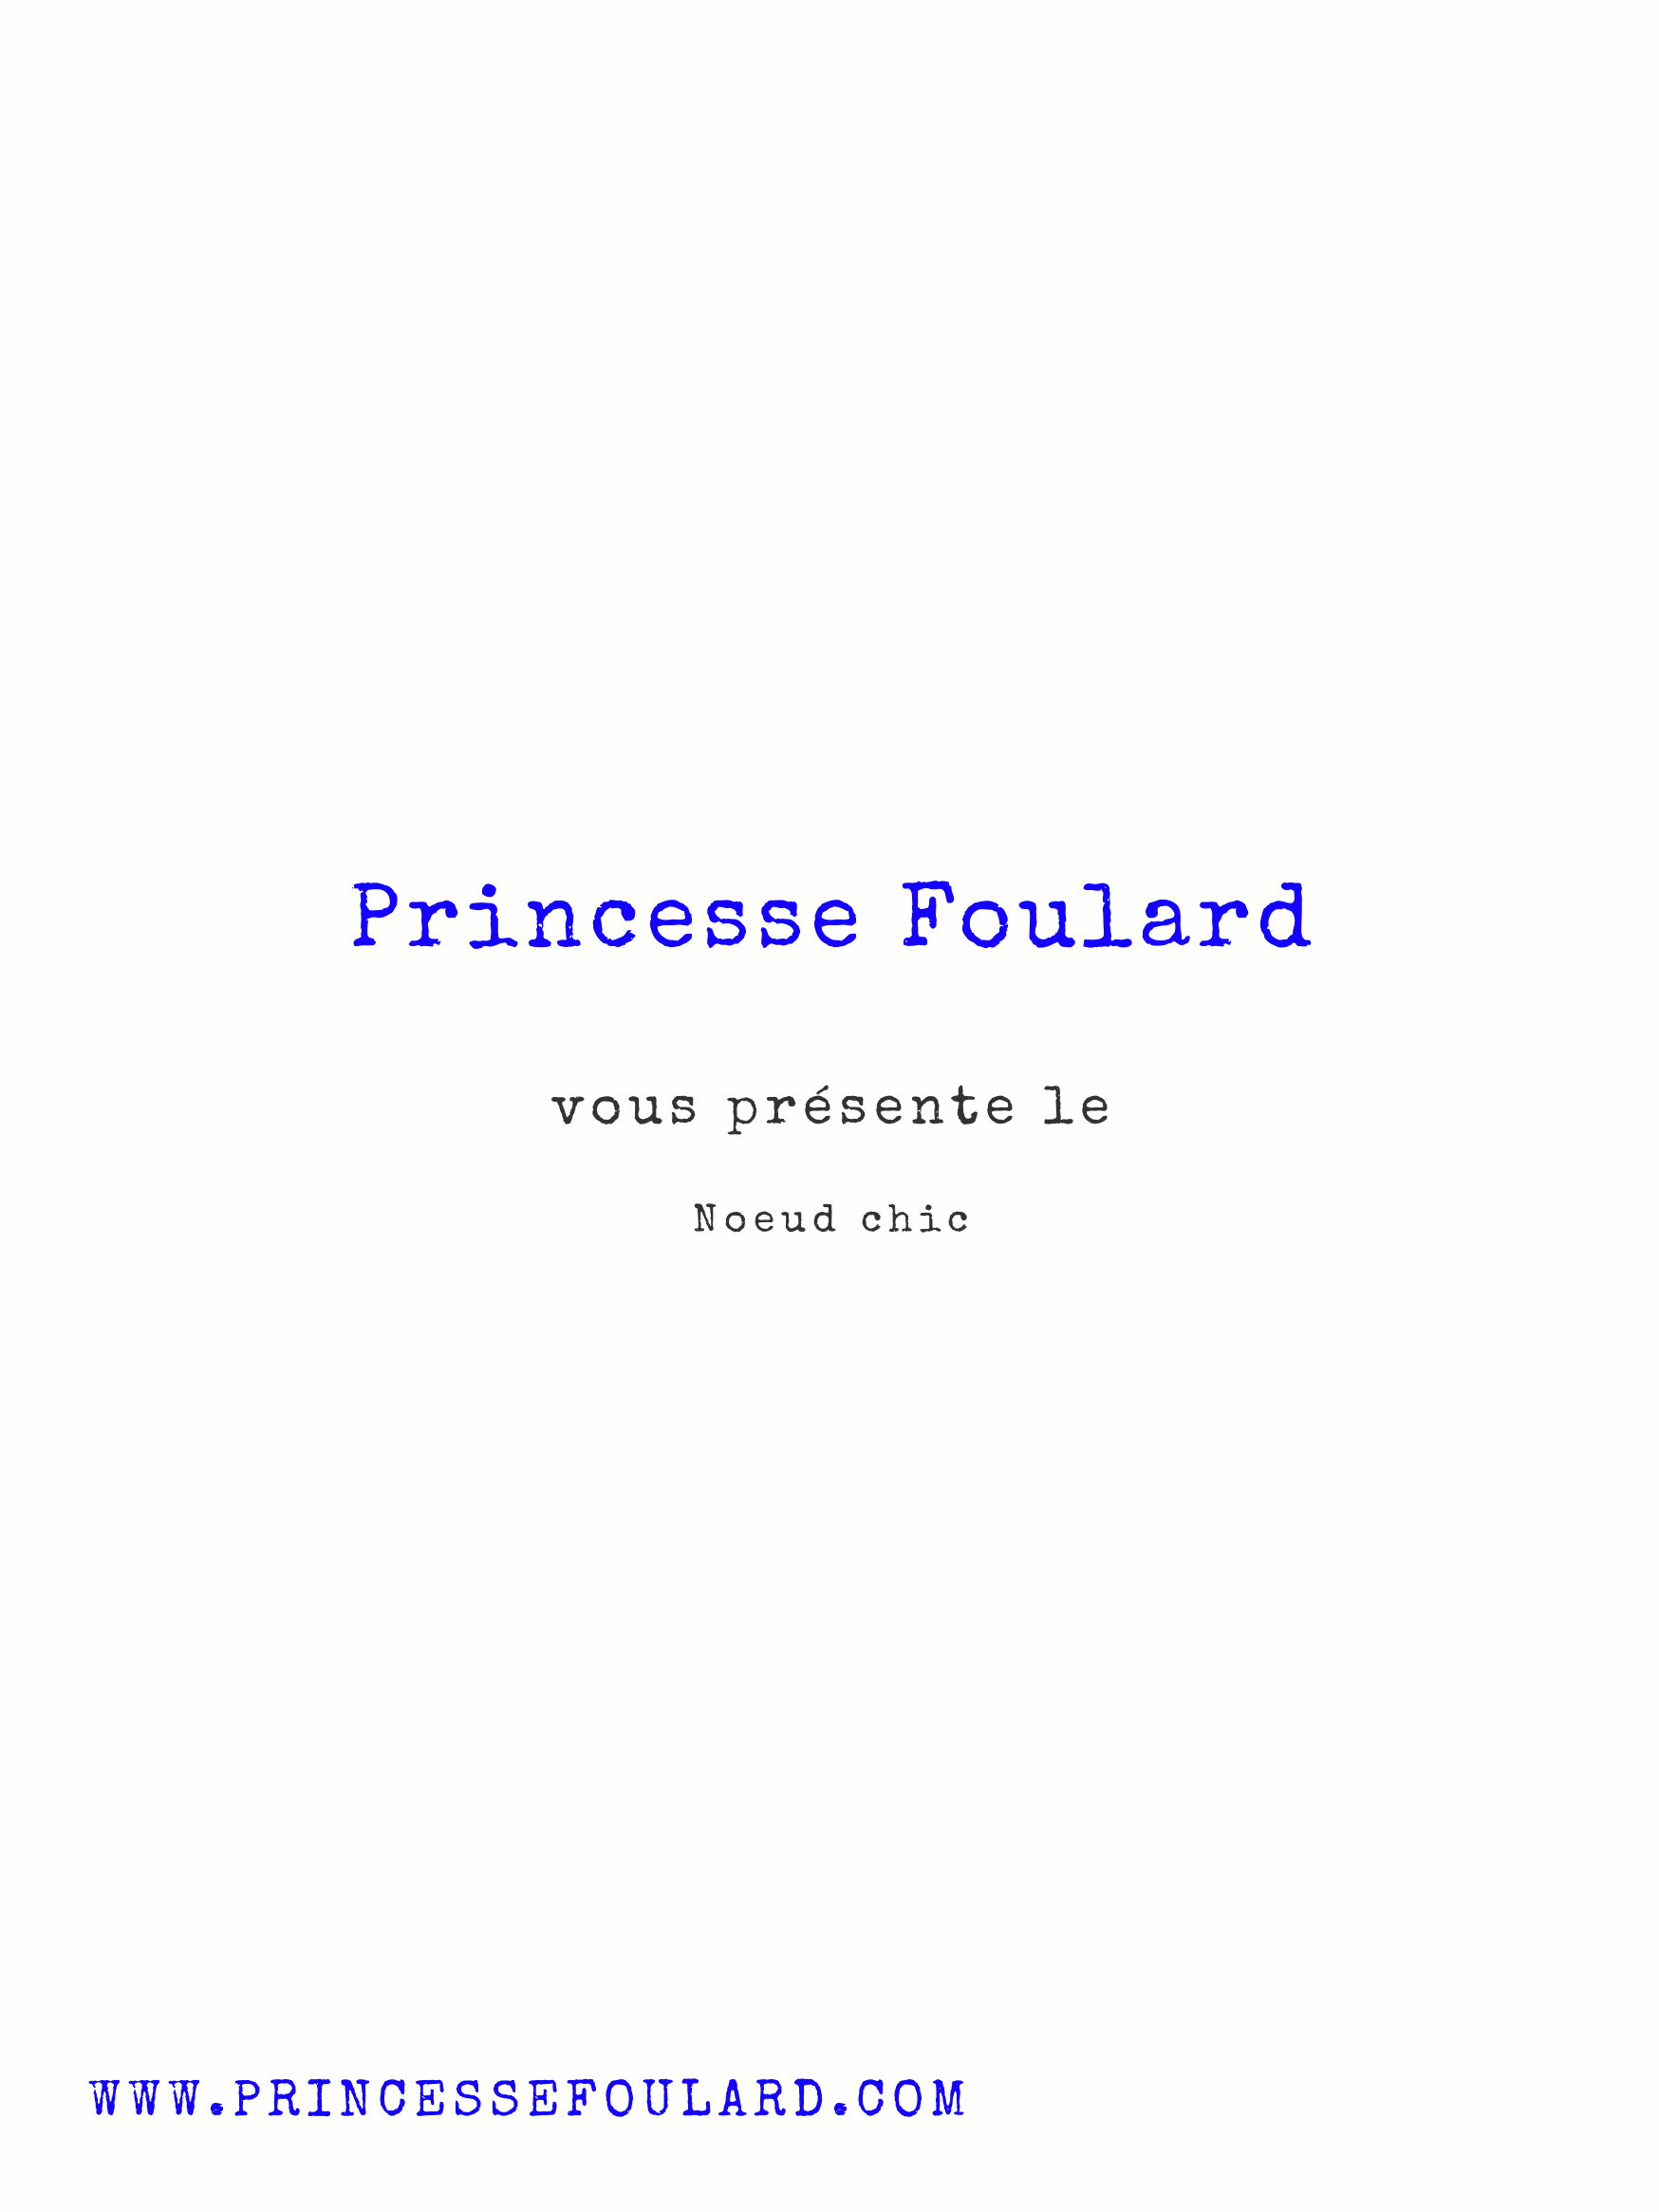 Tuto Noeud de Foulard chic par "Princesse Foulard"